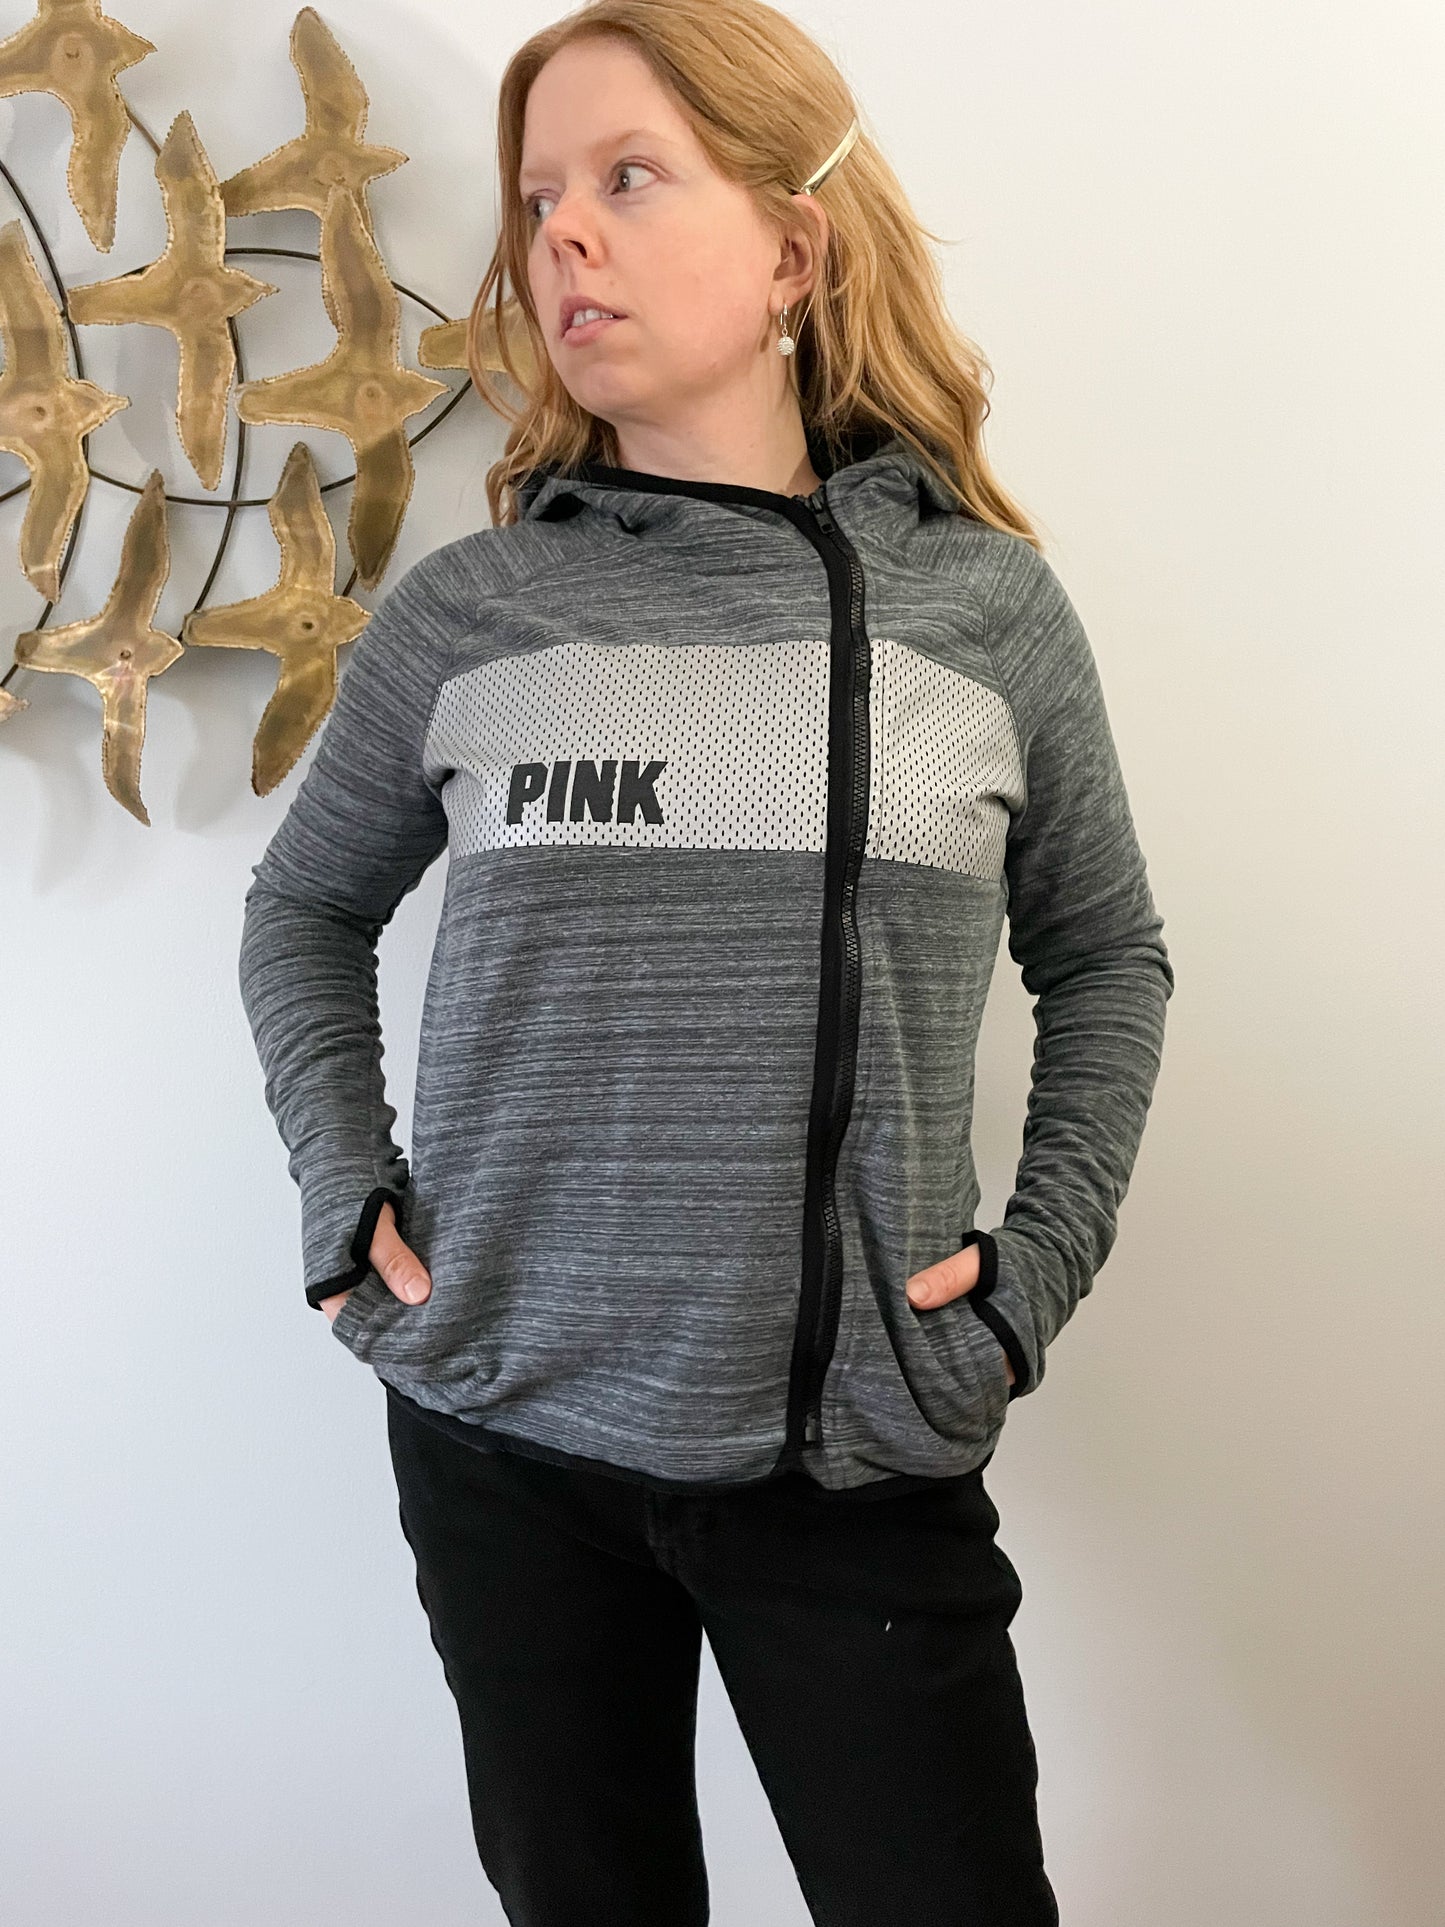 PINK Victoria's Secret Grey Asymmetrical Zipper Hoodie Sweater - S